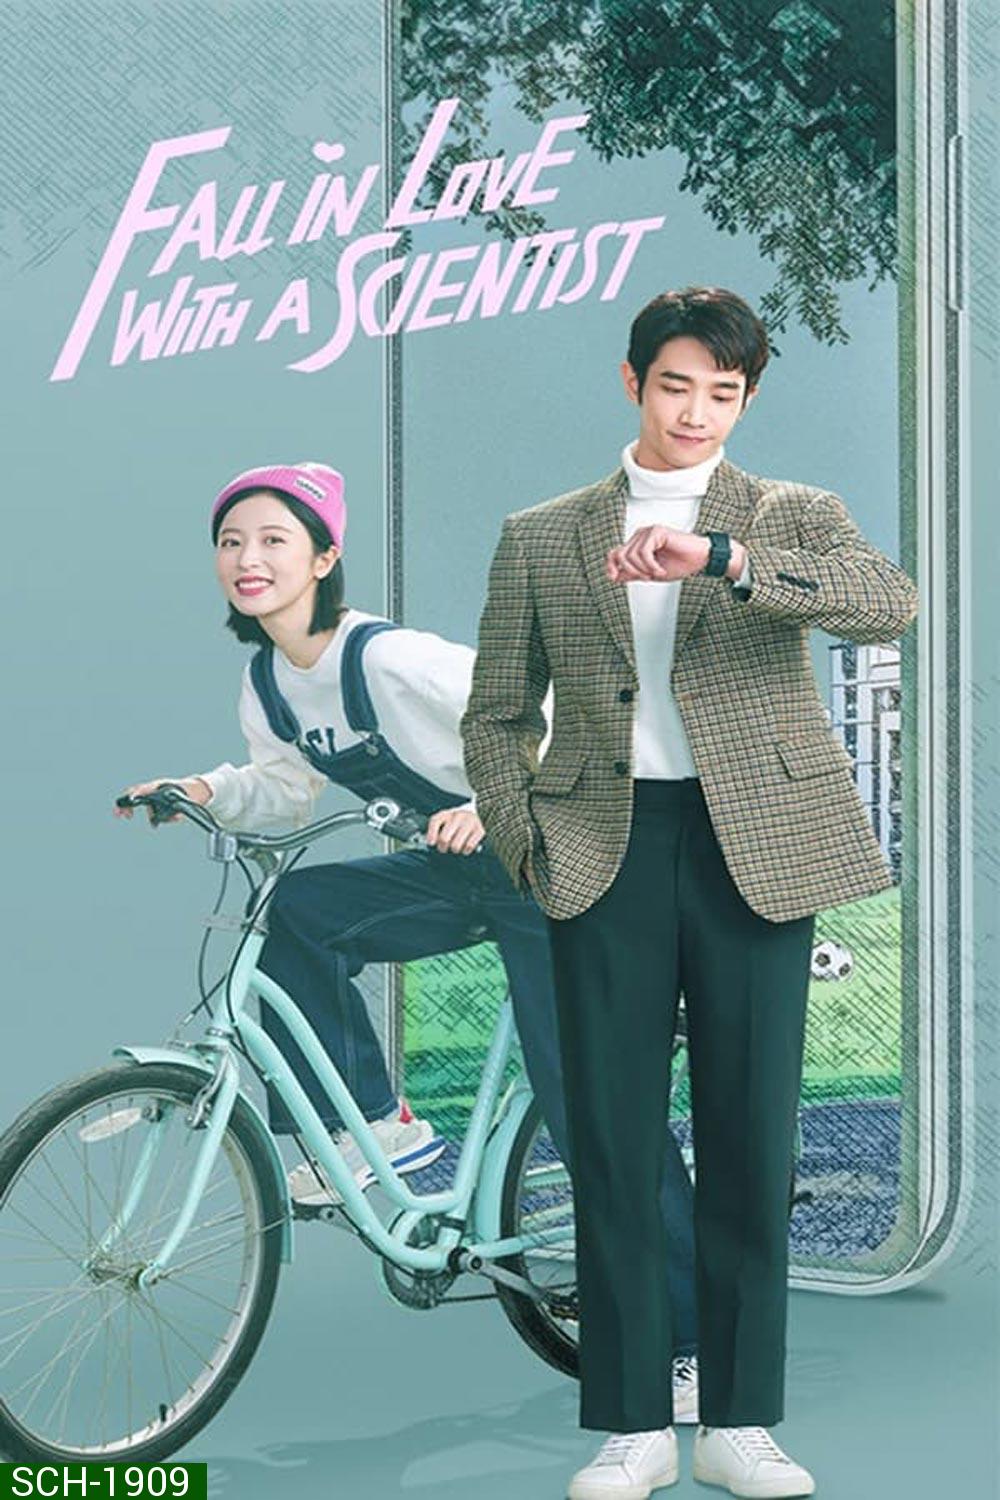 Fall In Love With A Scientist (2021) สะดุดรักนายนักวิทย์